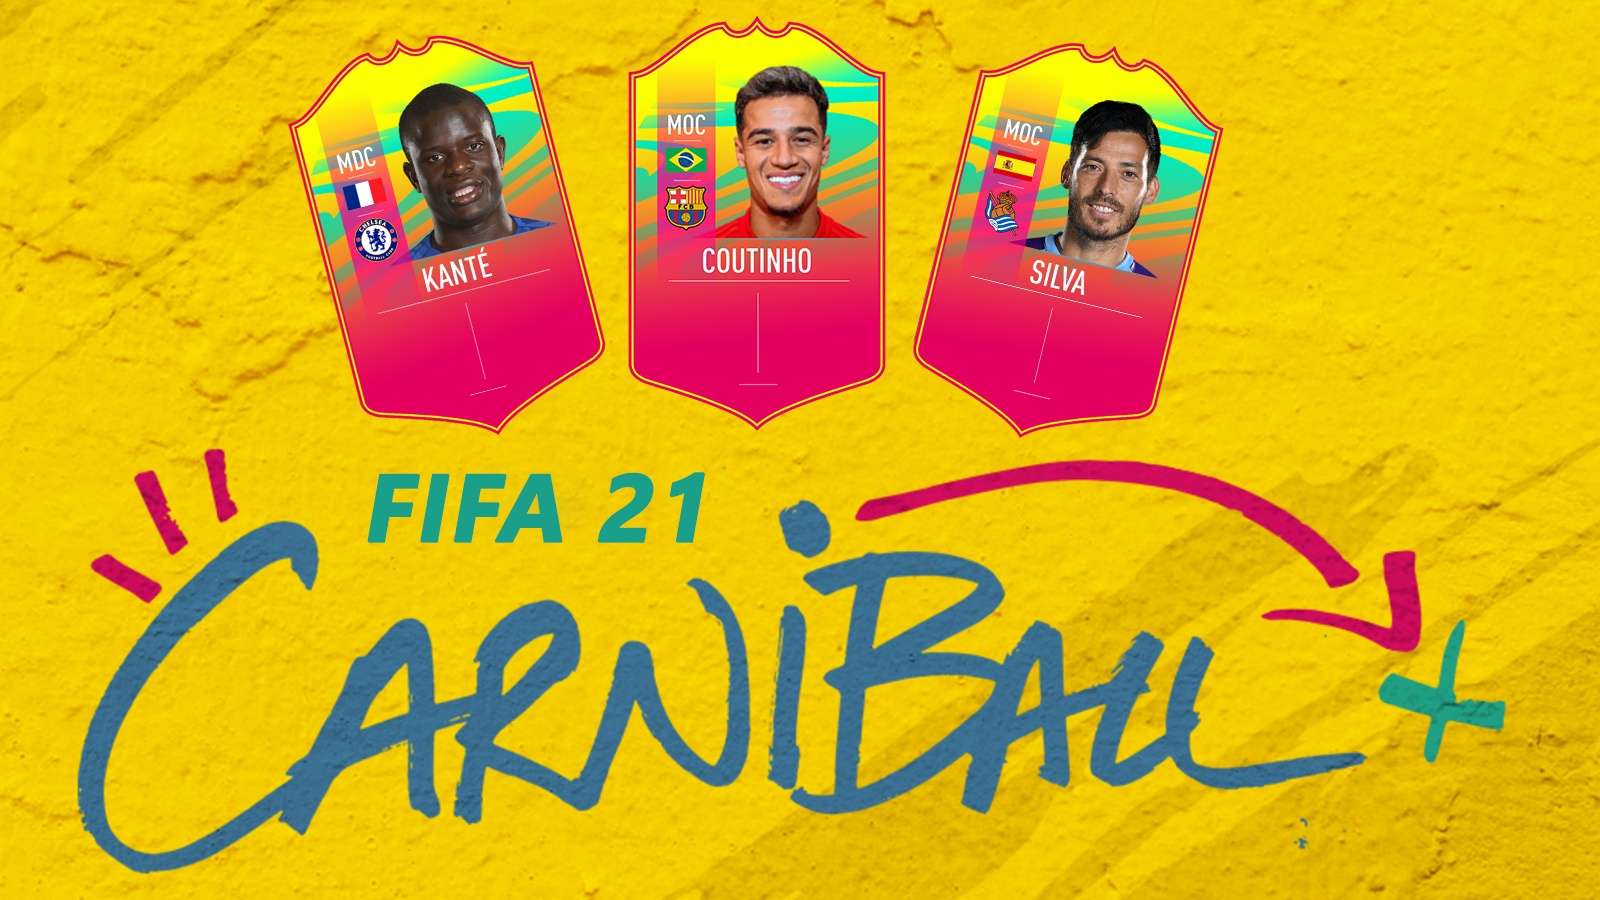 Carniball FIFA 21